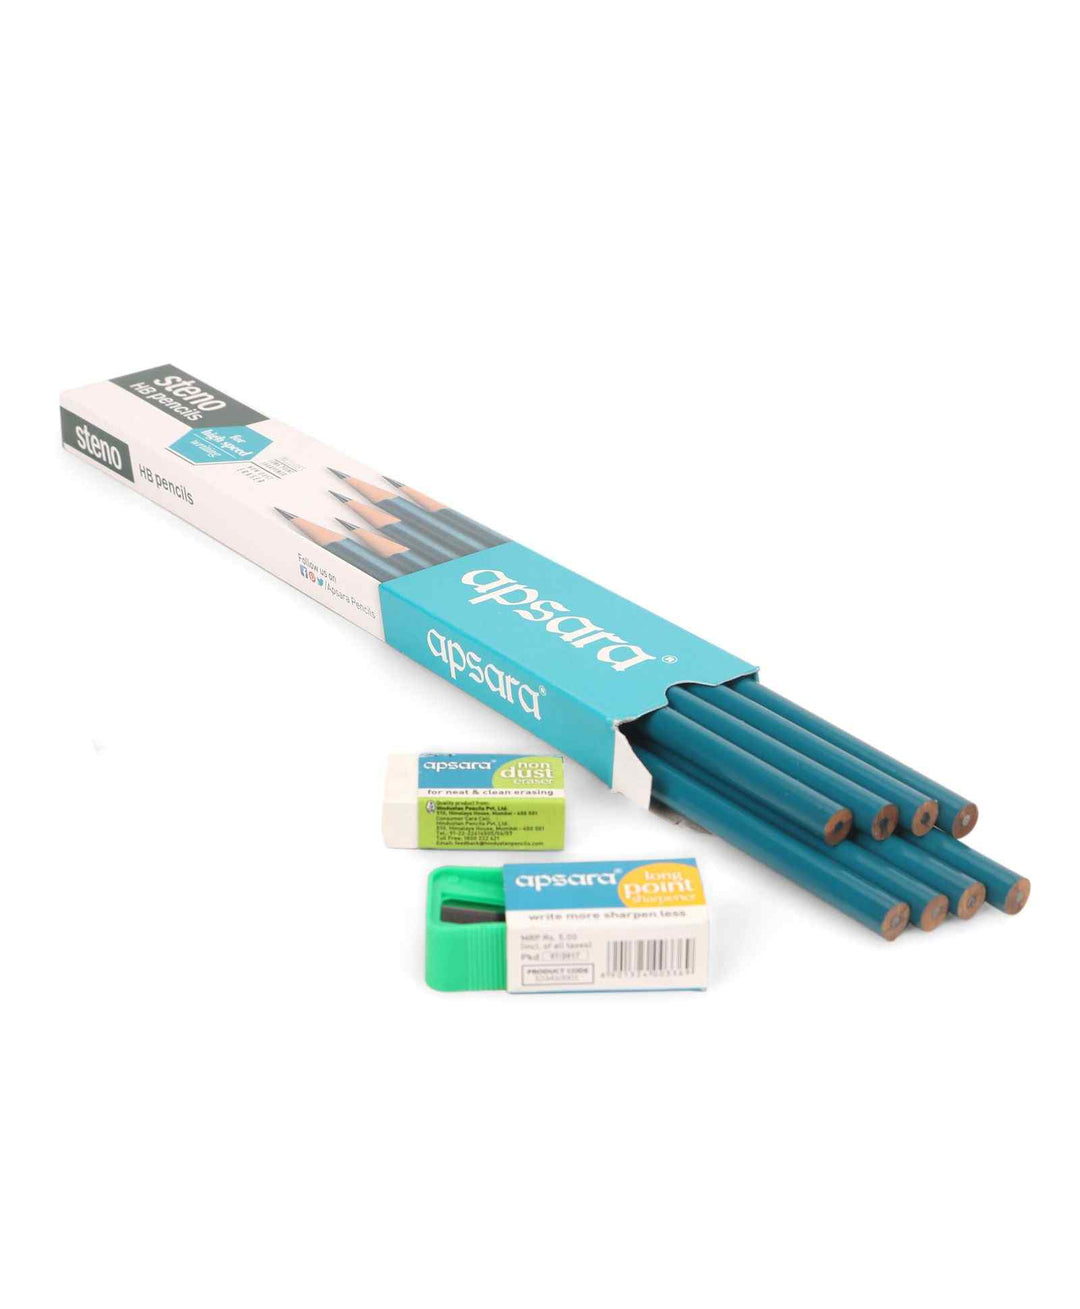 10 Pencils, eraser and Sharpener in Apsara Steno HB Pencil pack